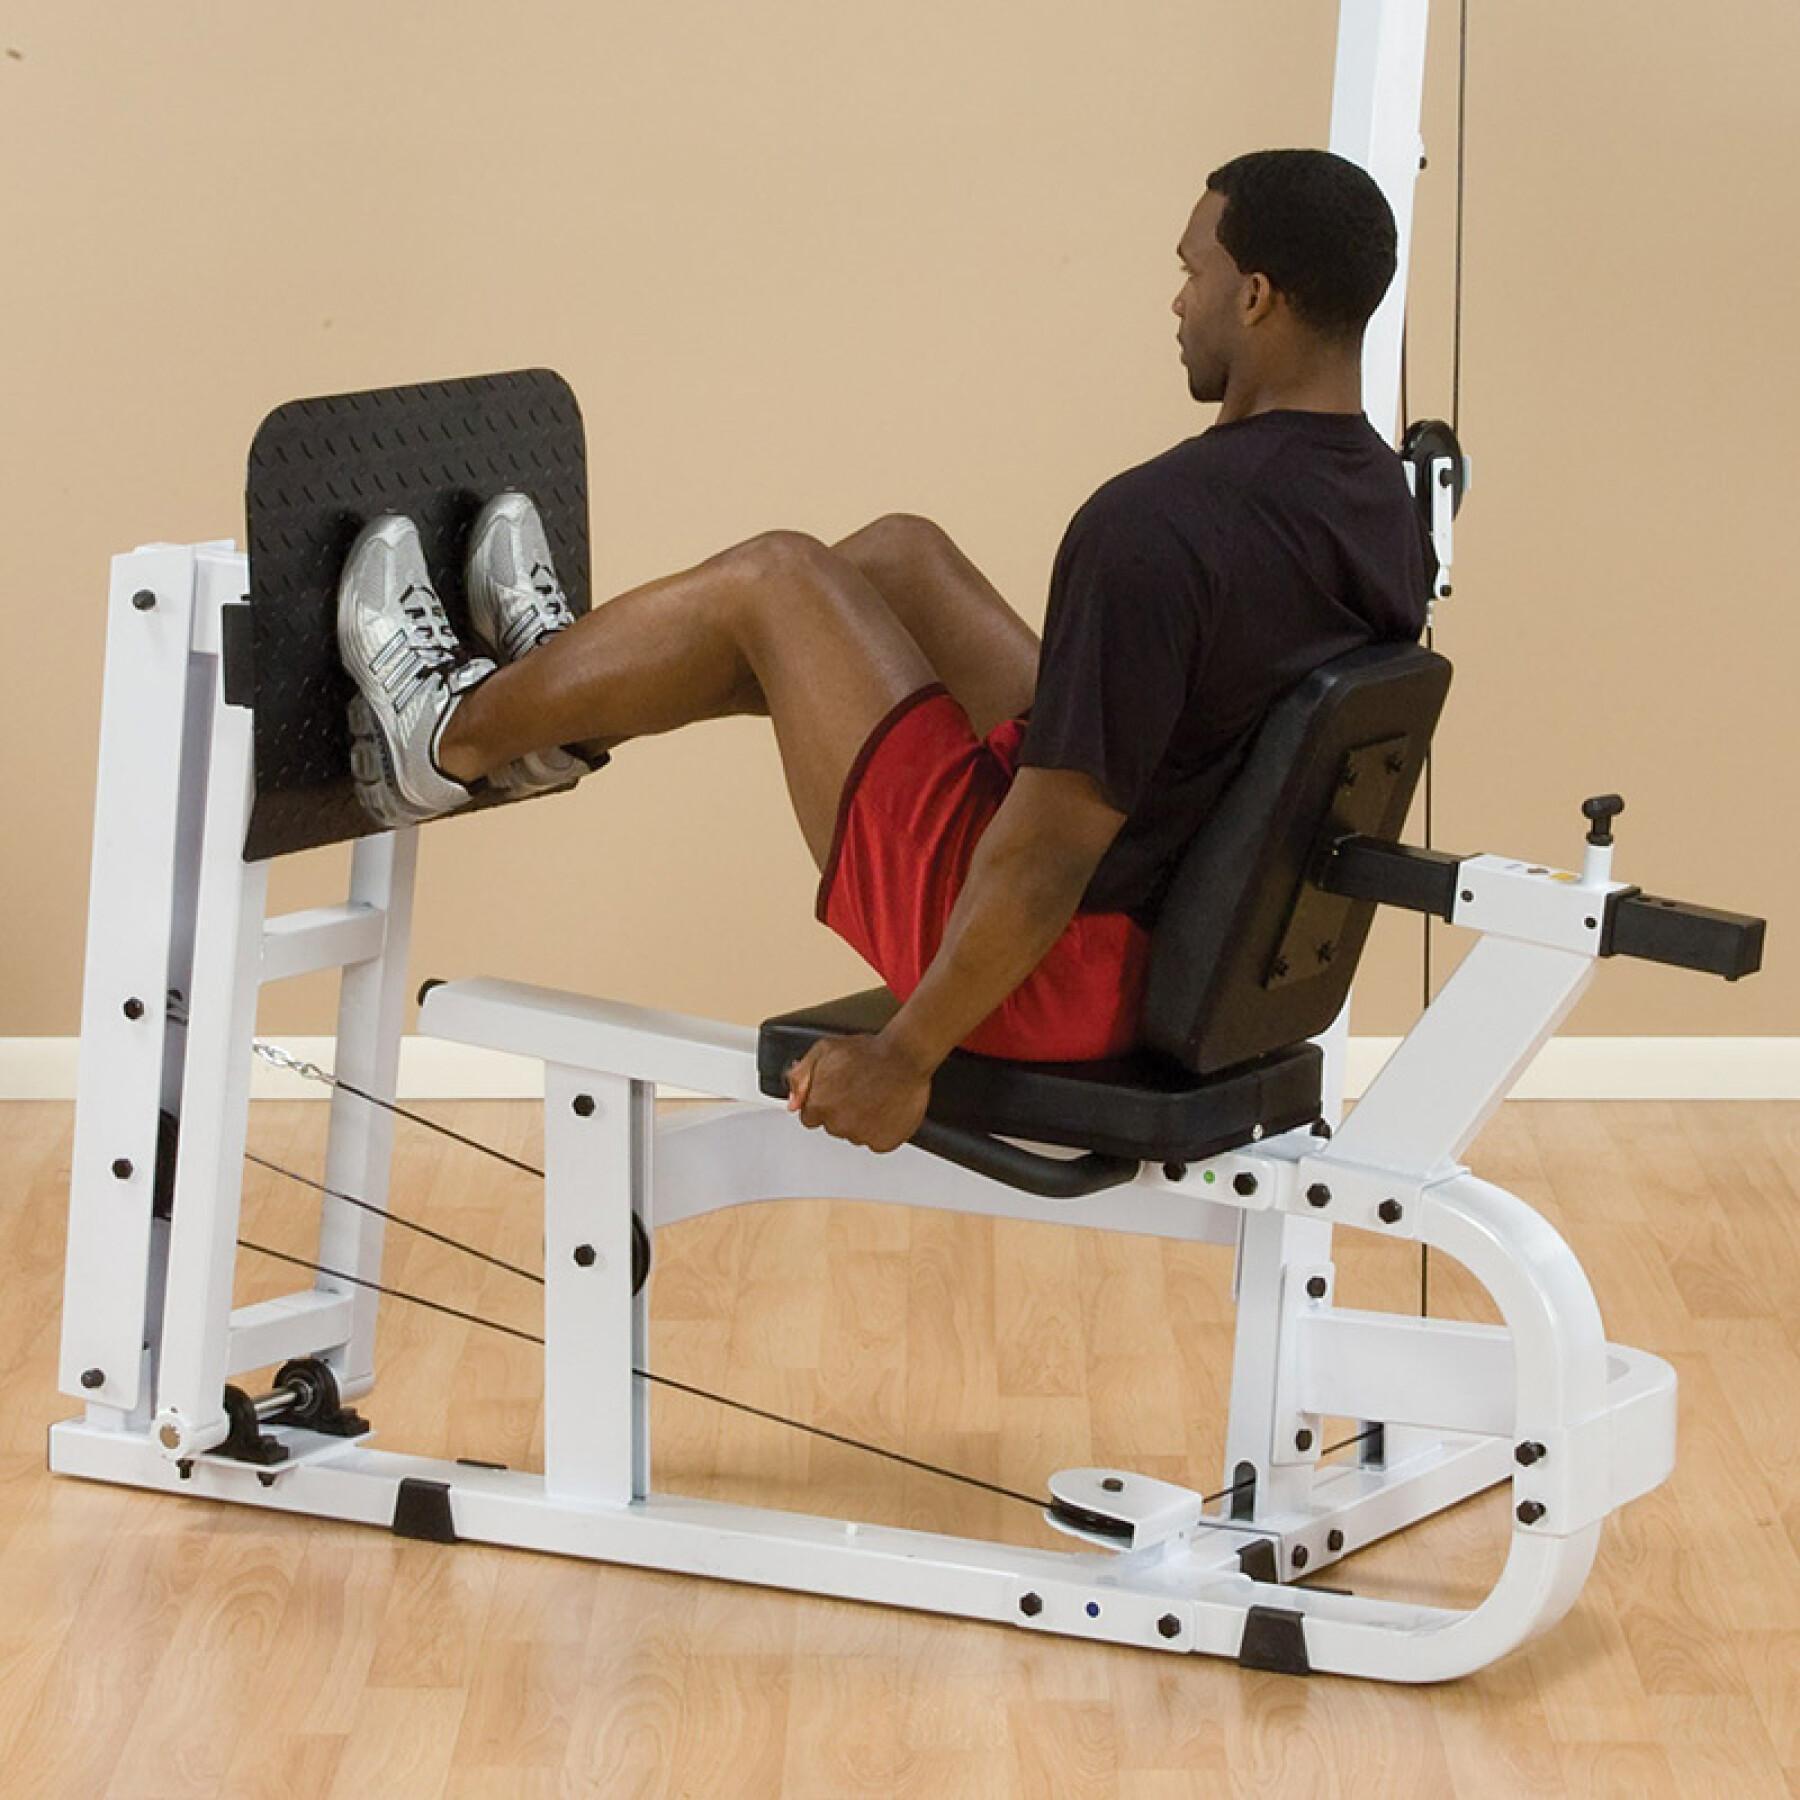 Appareil de musculation multifonctions Body Solid Gym 3 x 95 kg